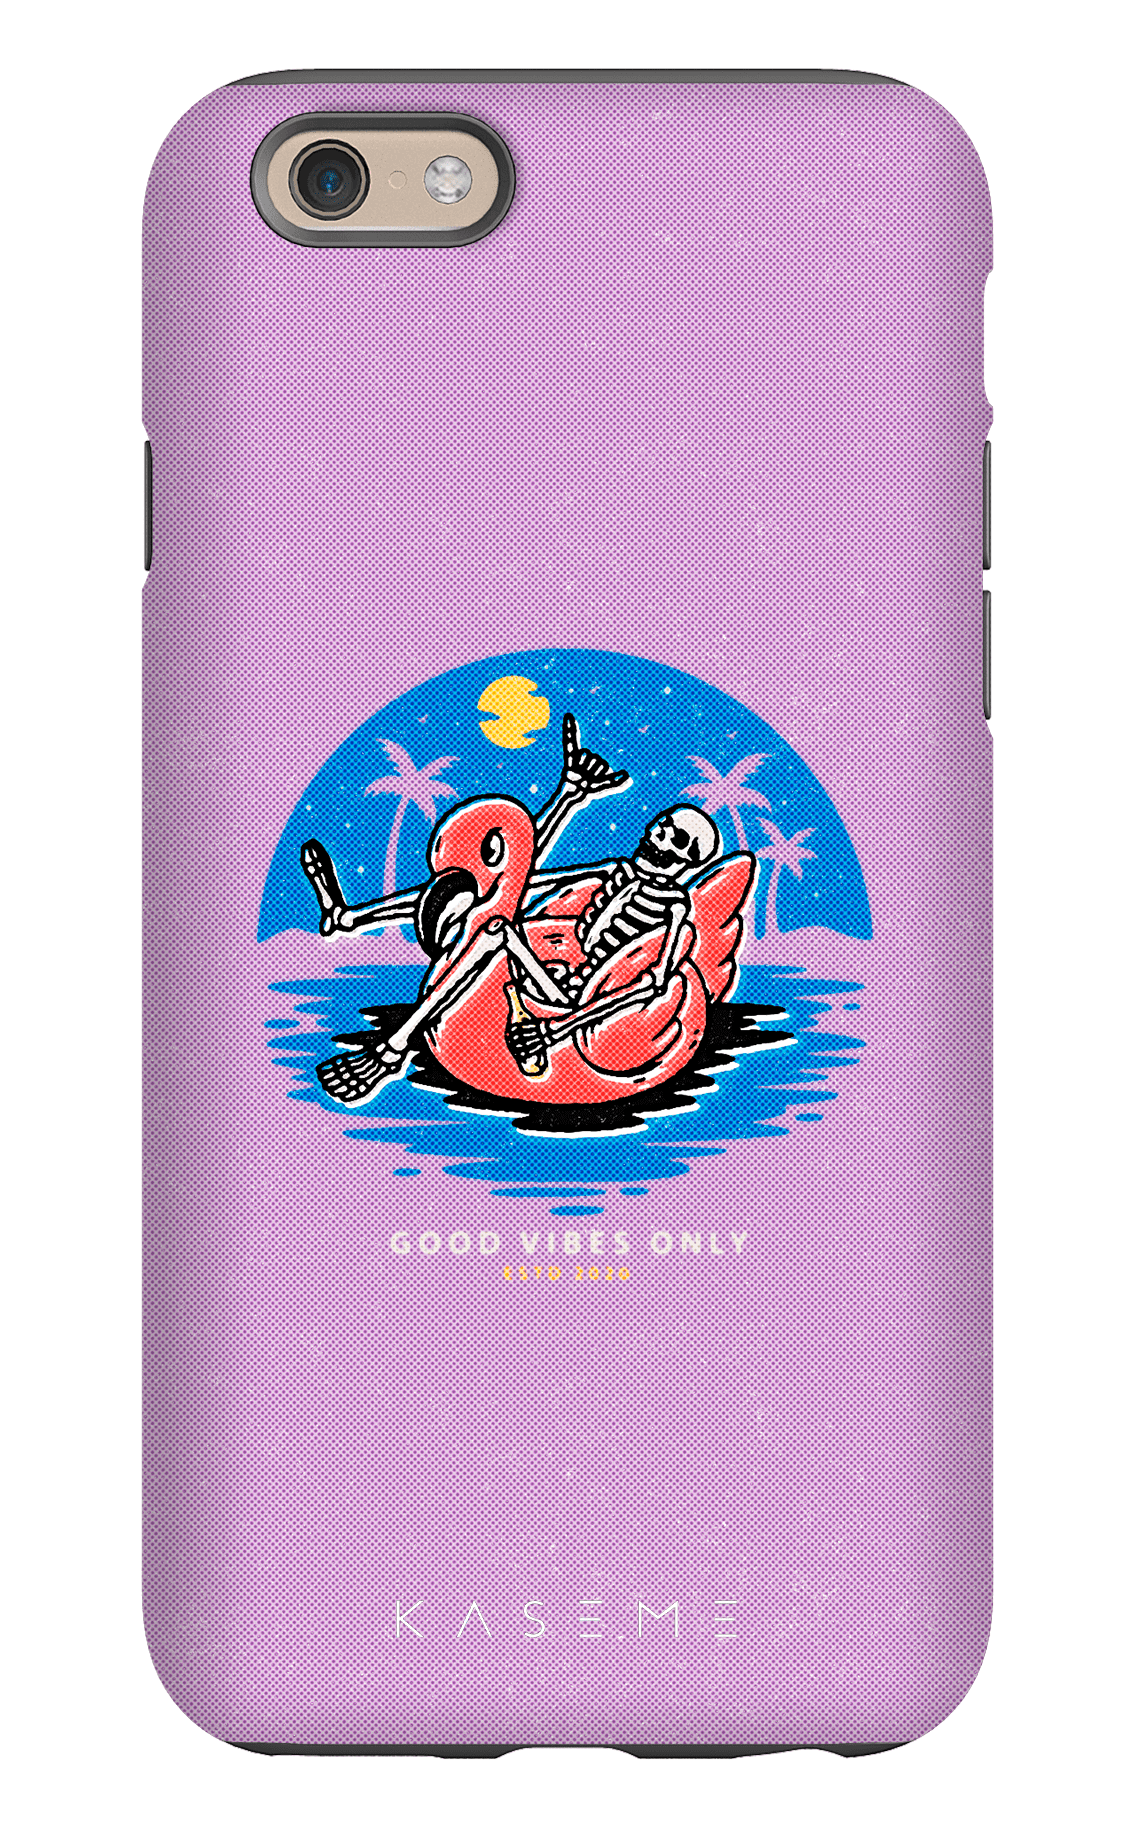 Seaside purple - iPhone 6/6s